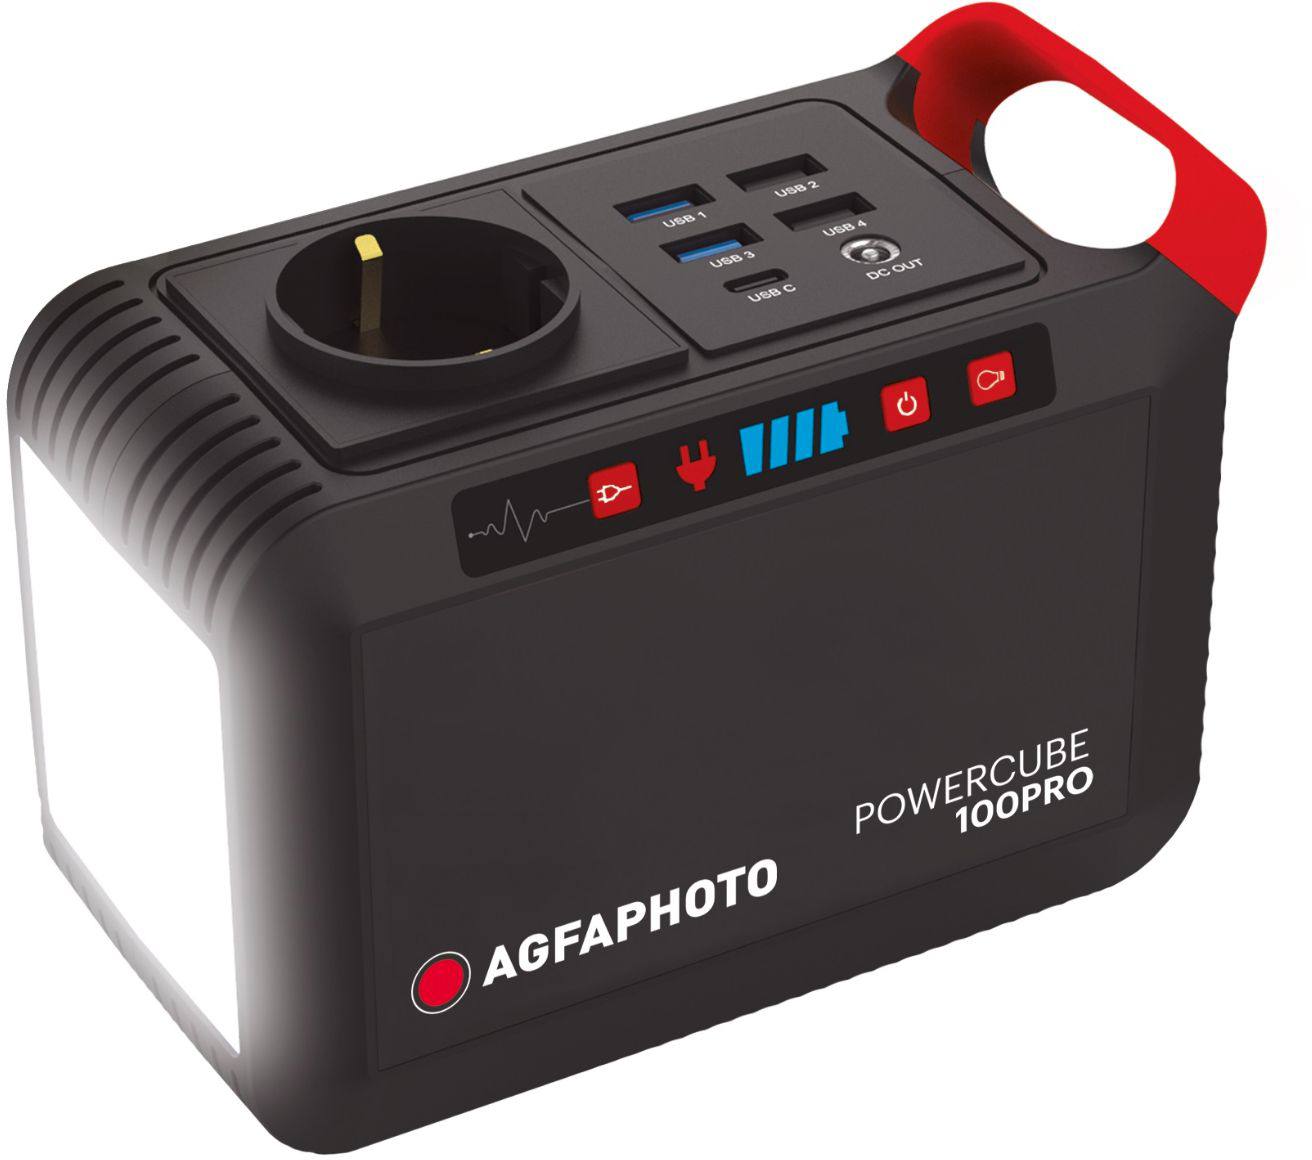 AgfaPhoto Powercube 100 Pro